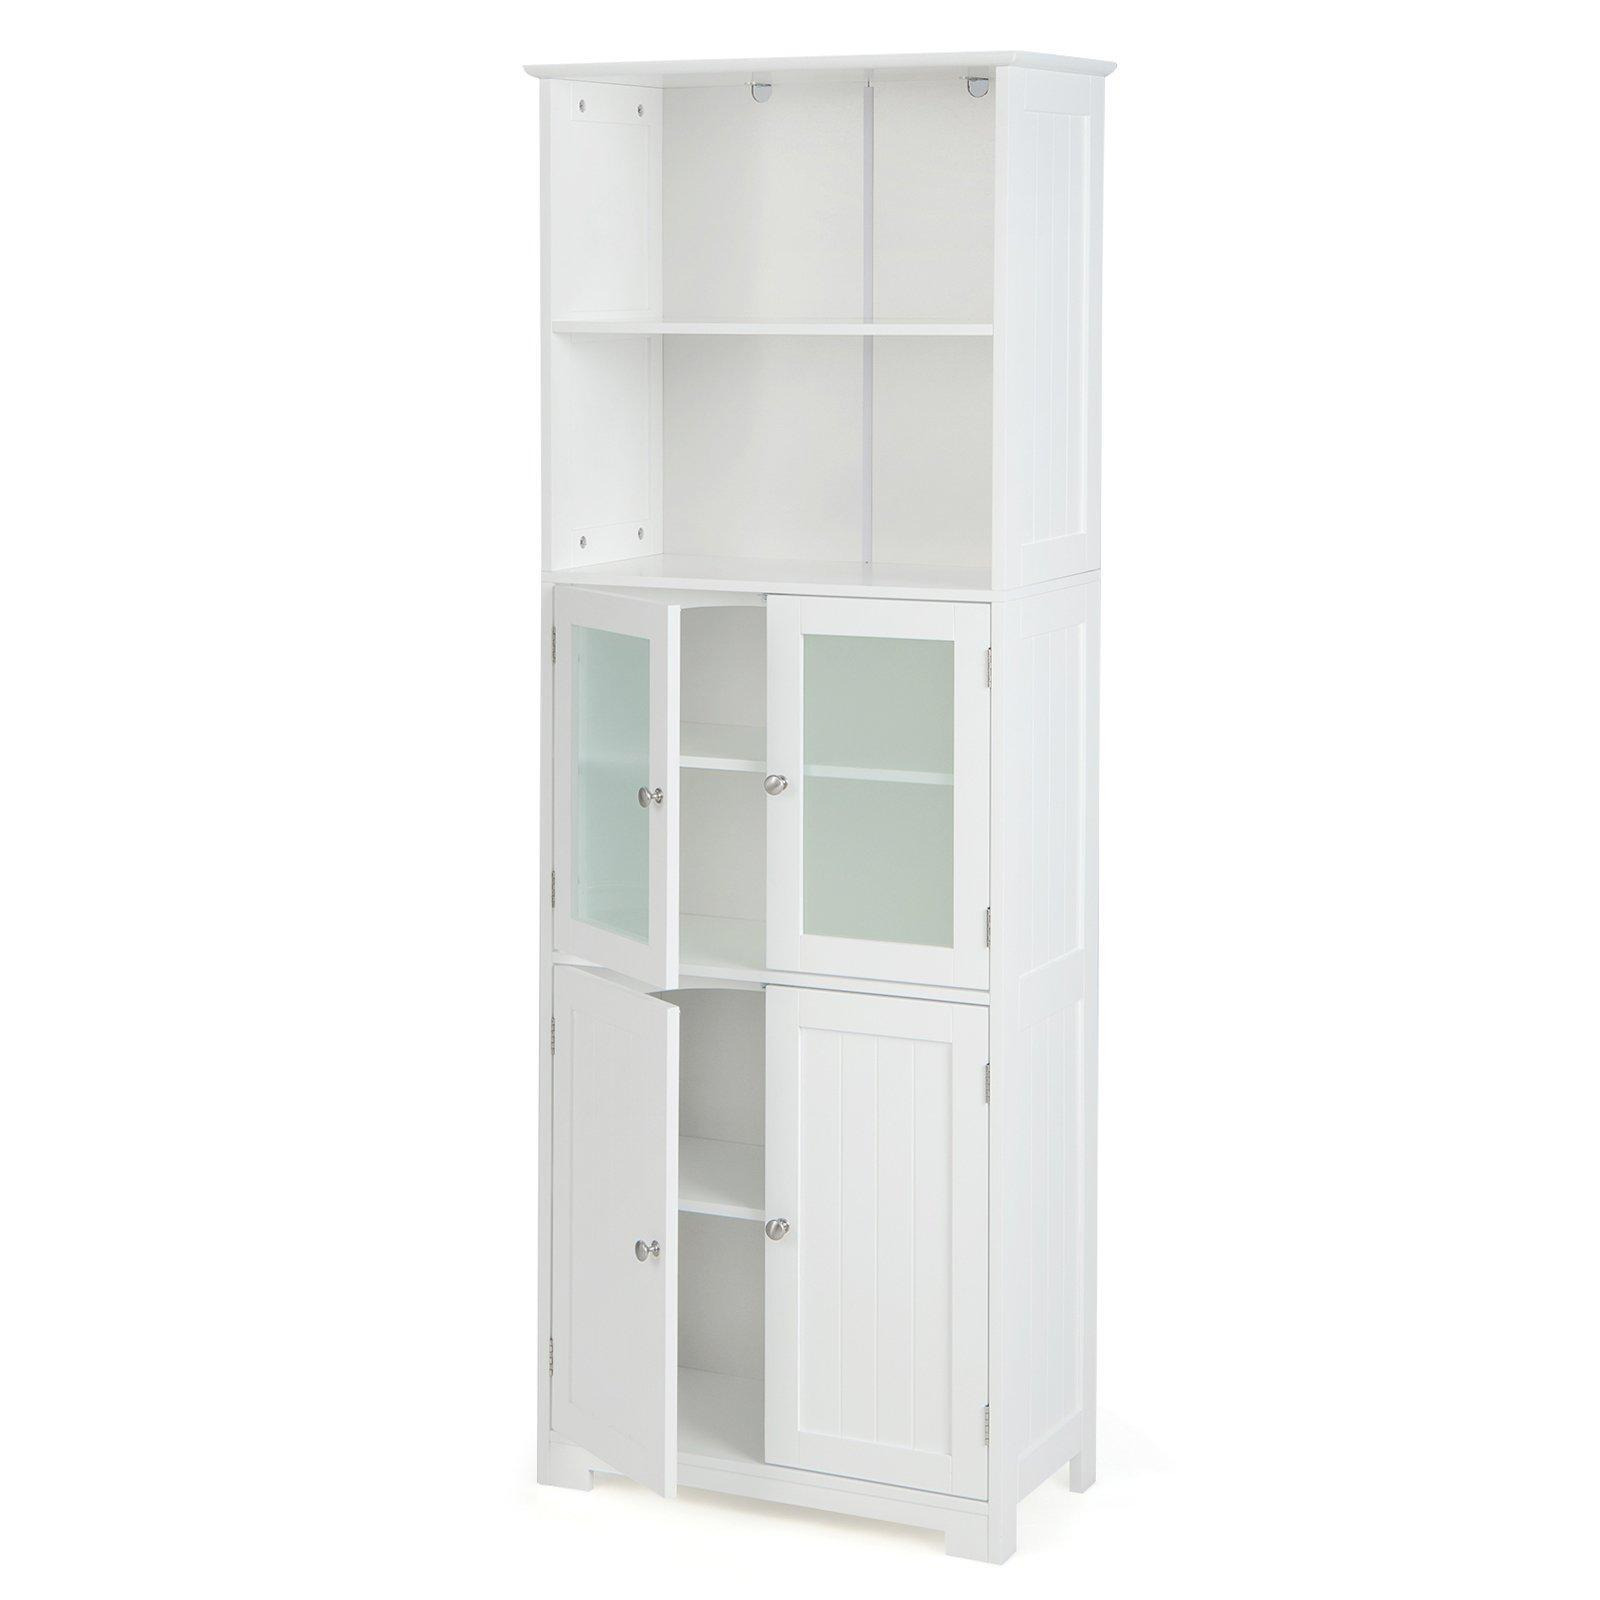 163cm Tall Bathroom Storage Cabinet Freestanding Kitchen Pantry Cupboard - image 1